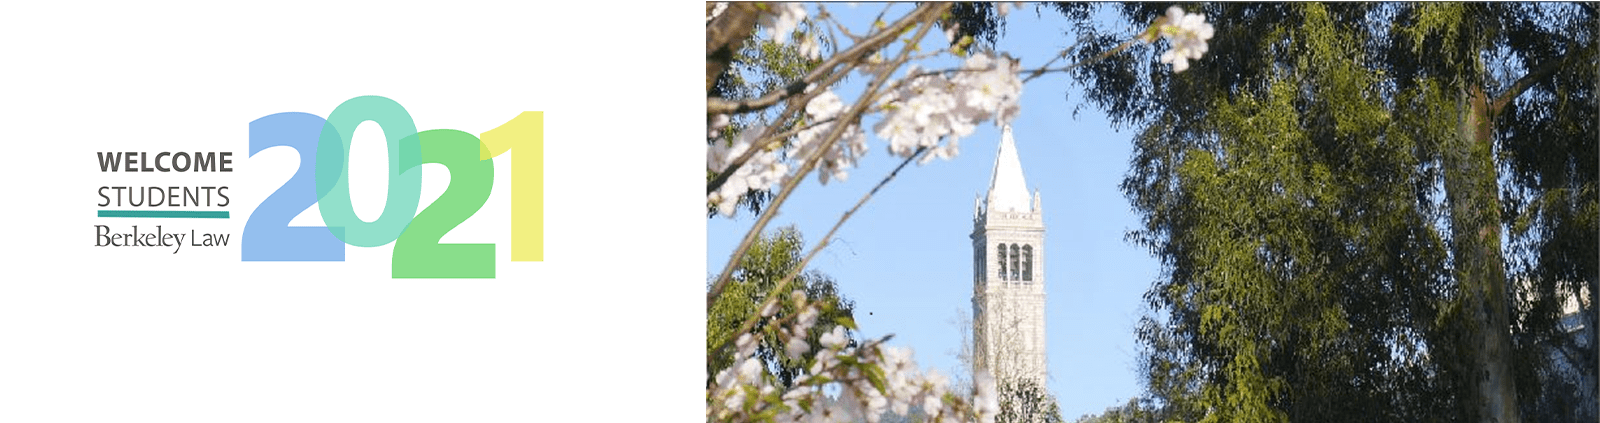 Berkeley Law Welcome Students 2021